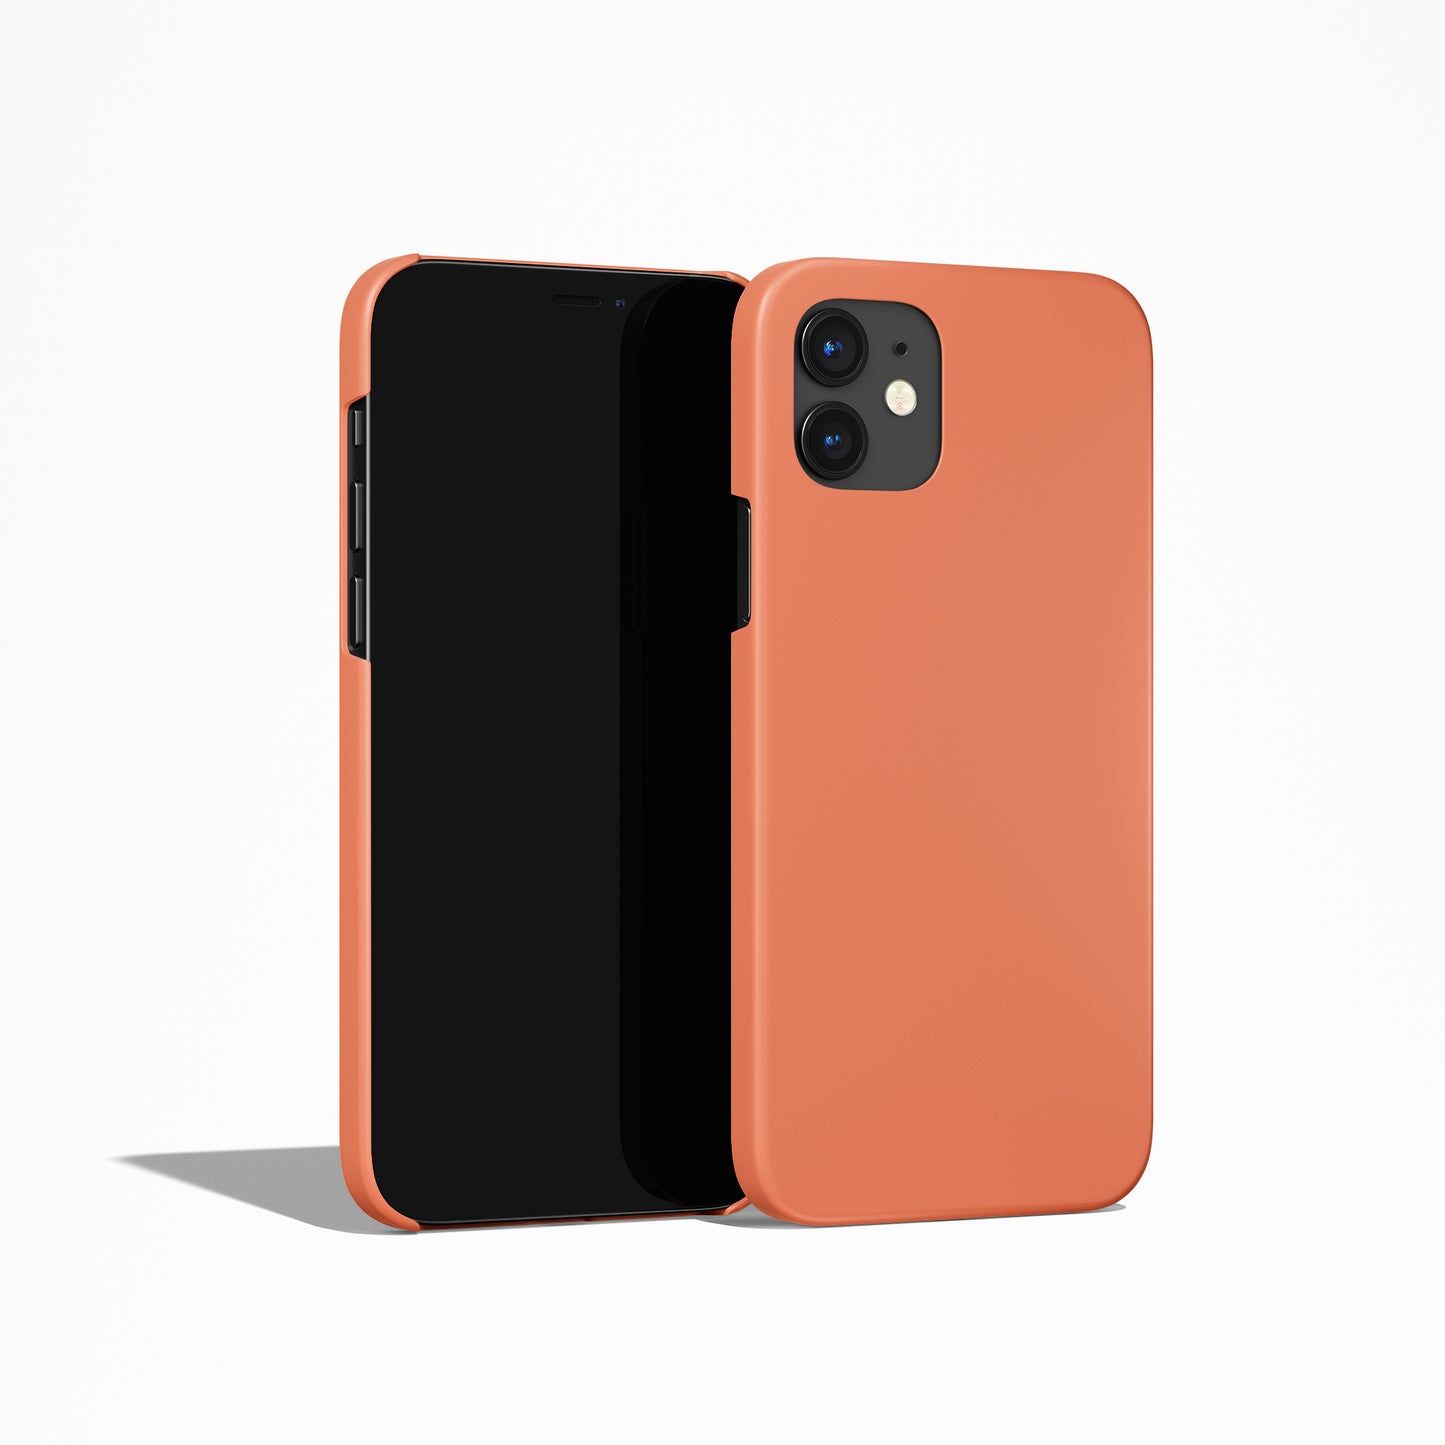 Peach Color iPhone Case